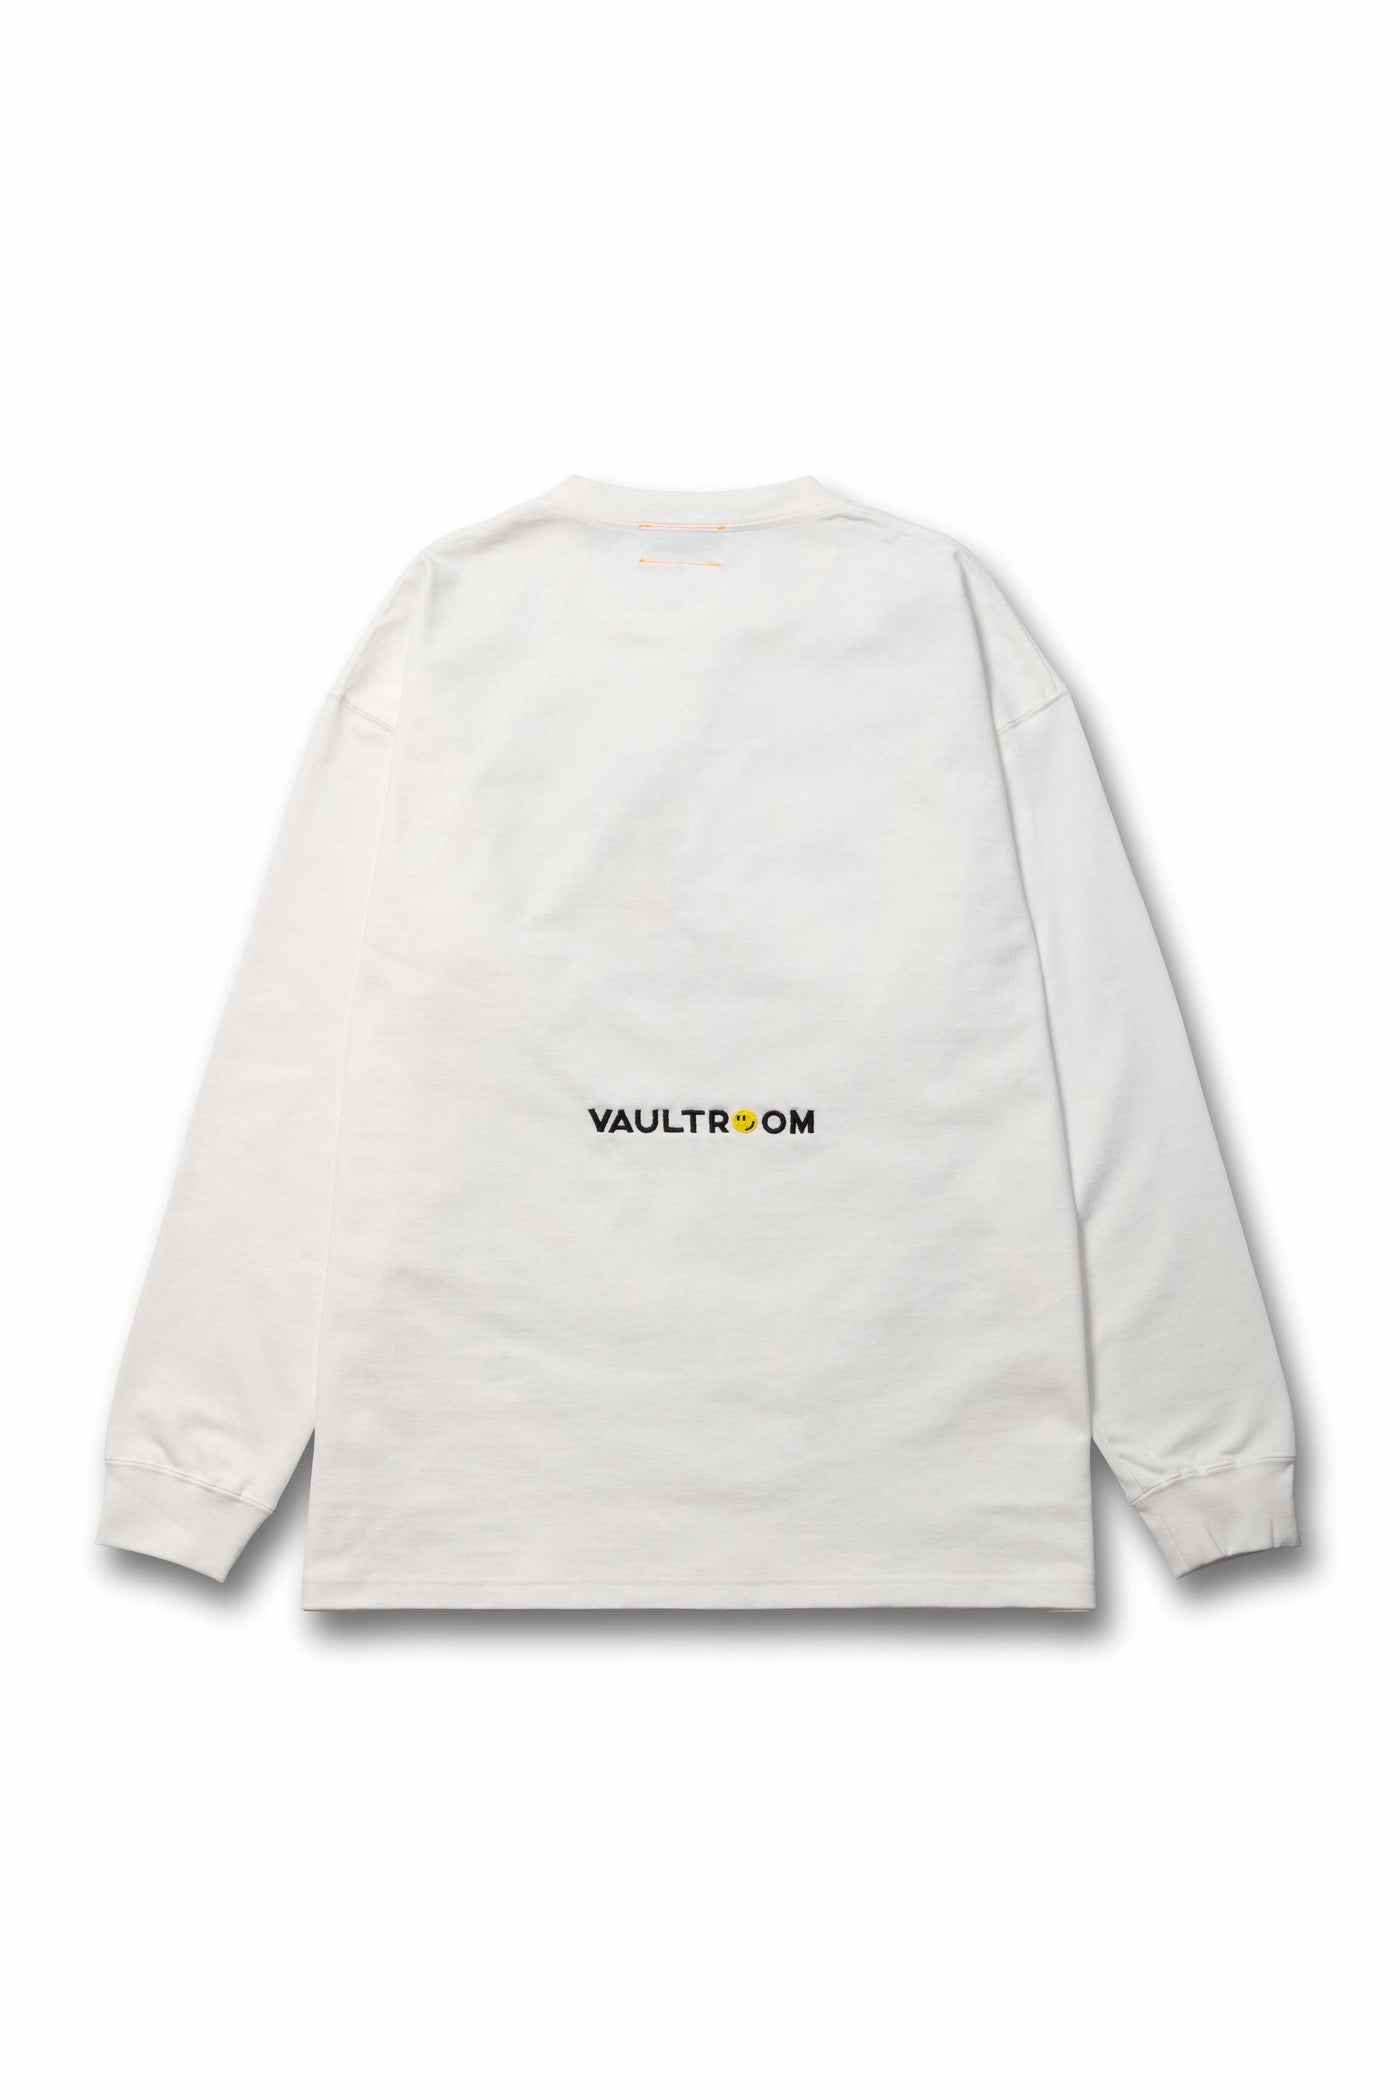 vaultroom vcc pogo long sleeve shirt - トップス